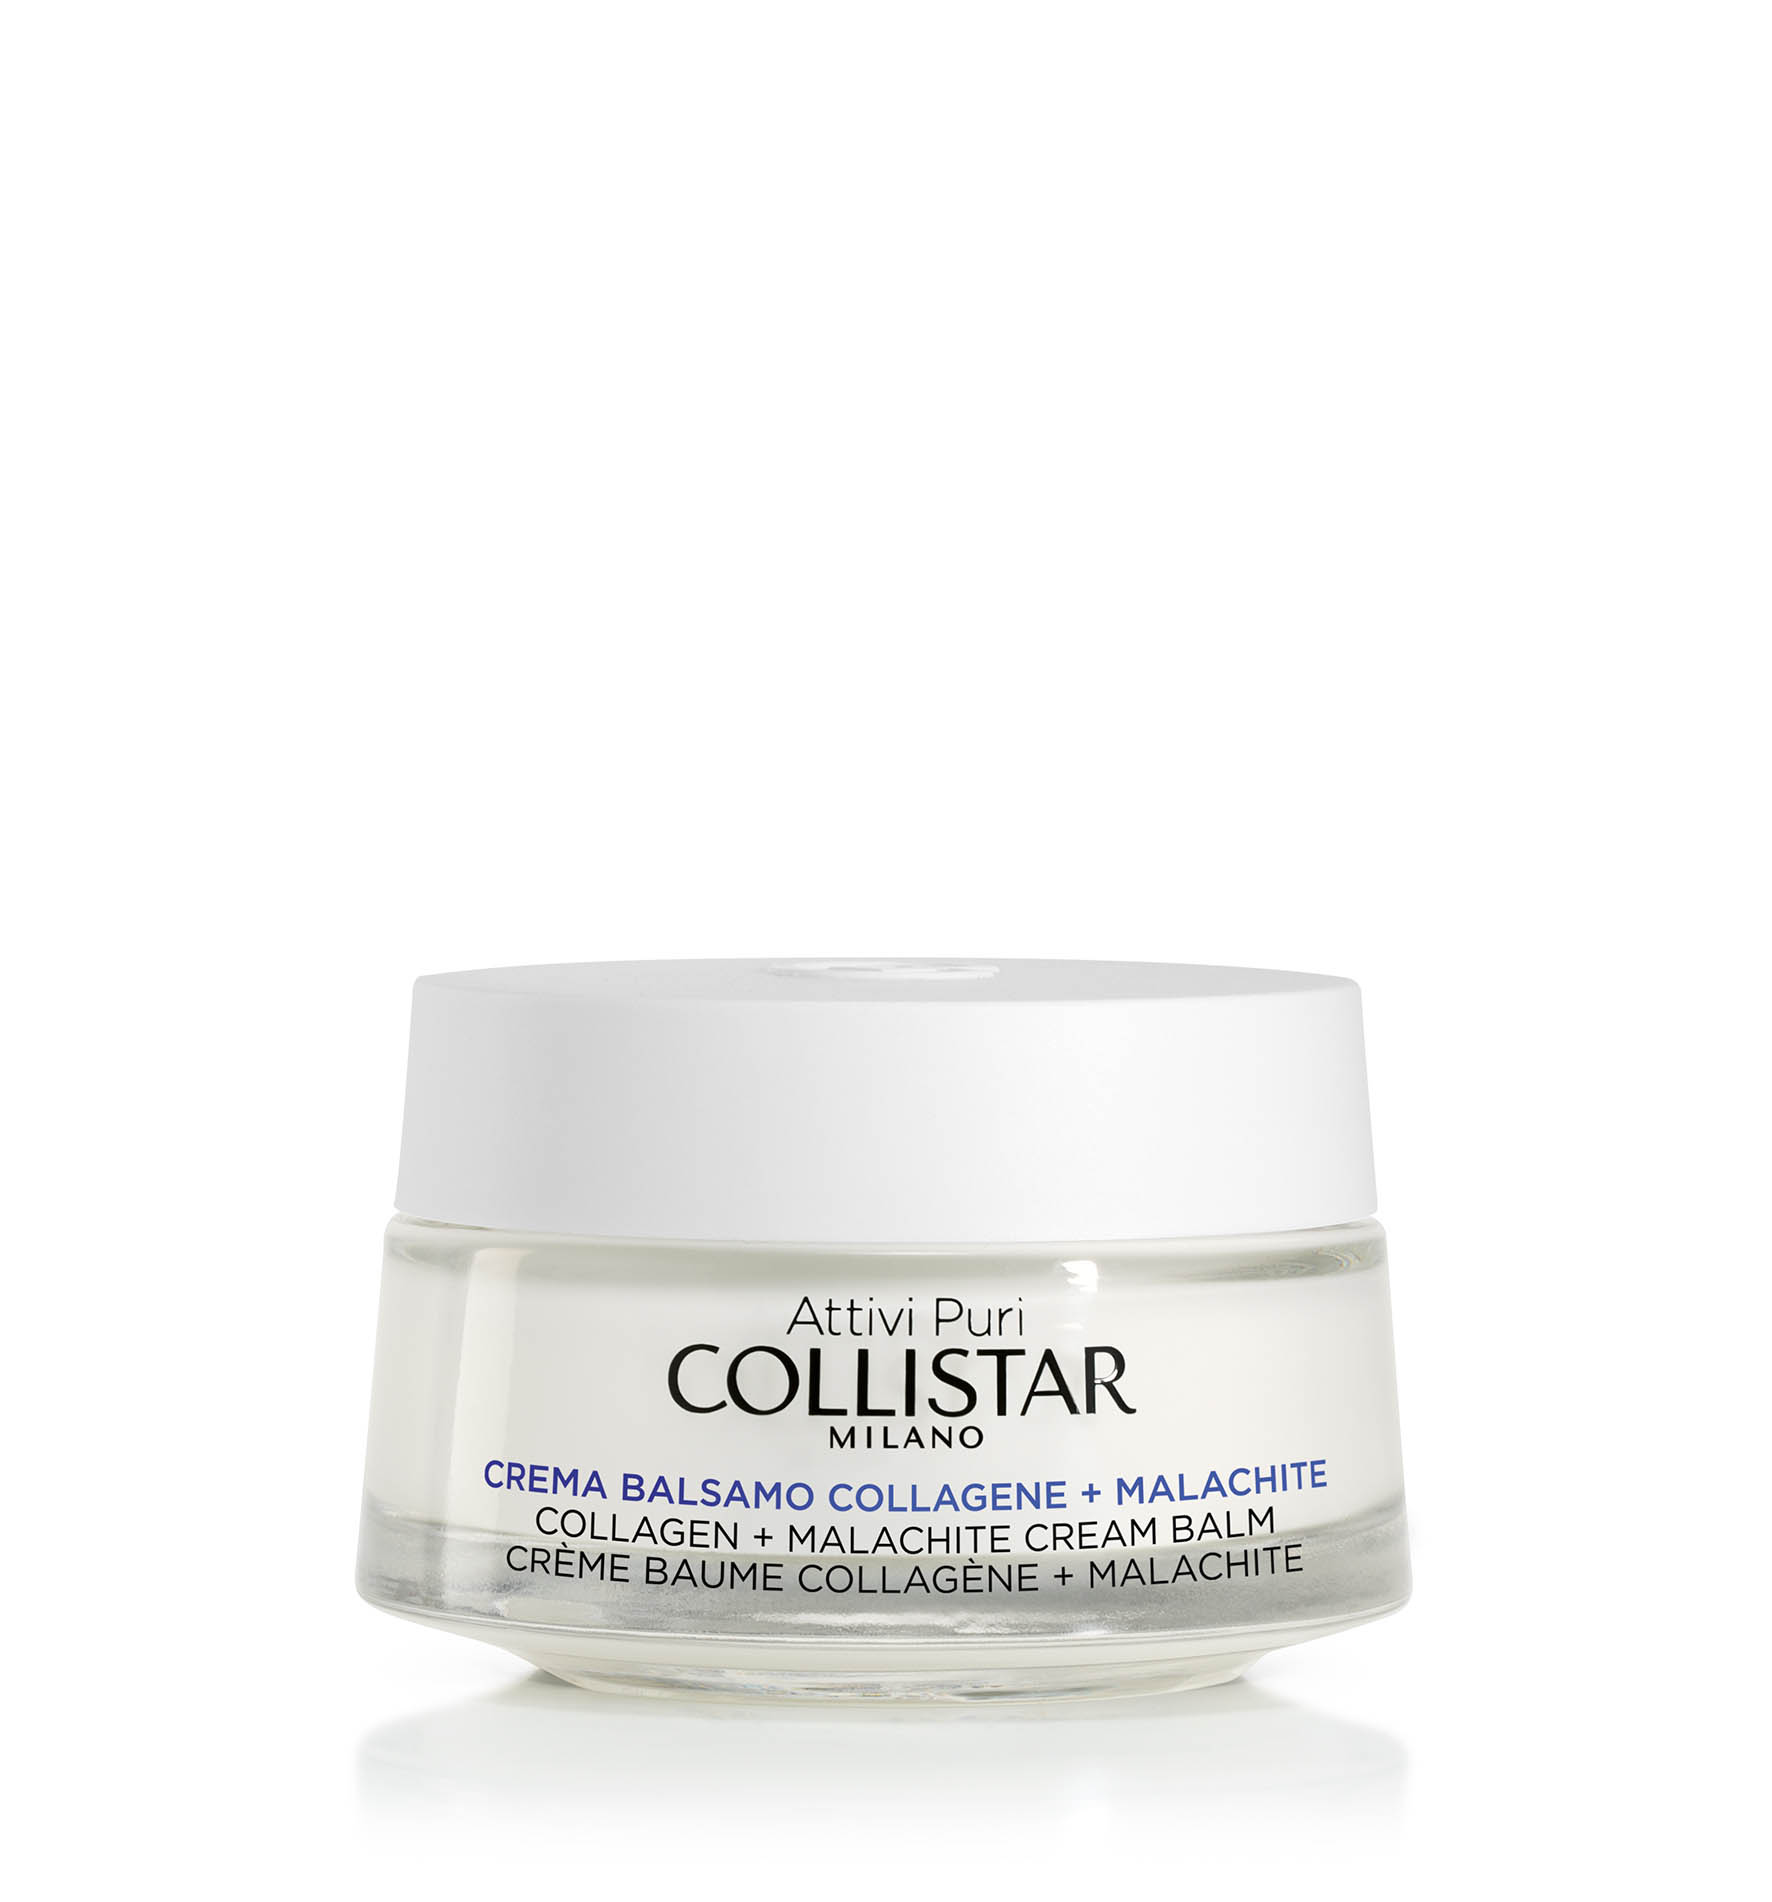 COLLAGEN + MALACHITE CREAM BALM - Dry skin | Collistar - Shop Online Ufficiale